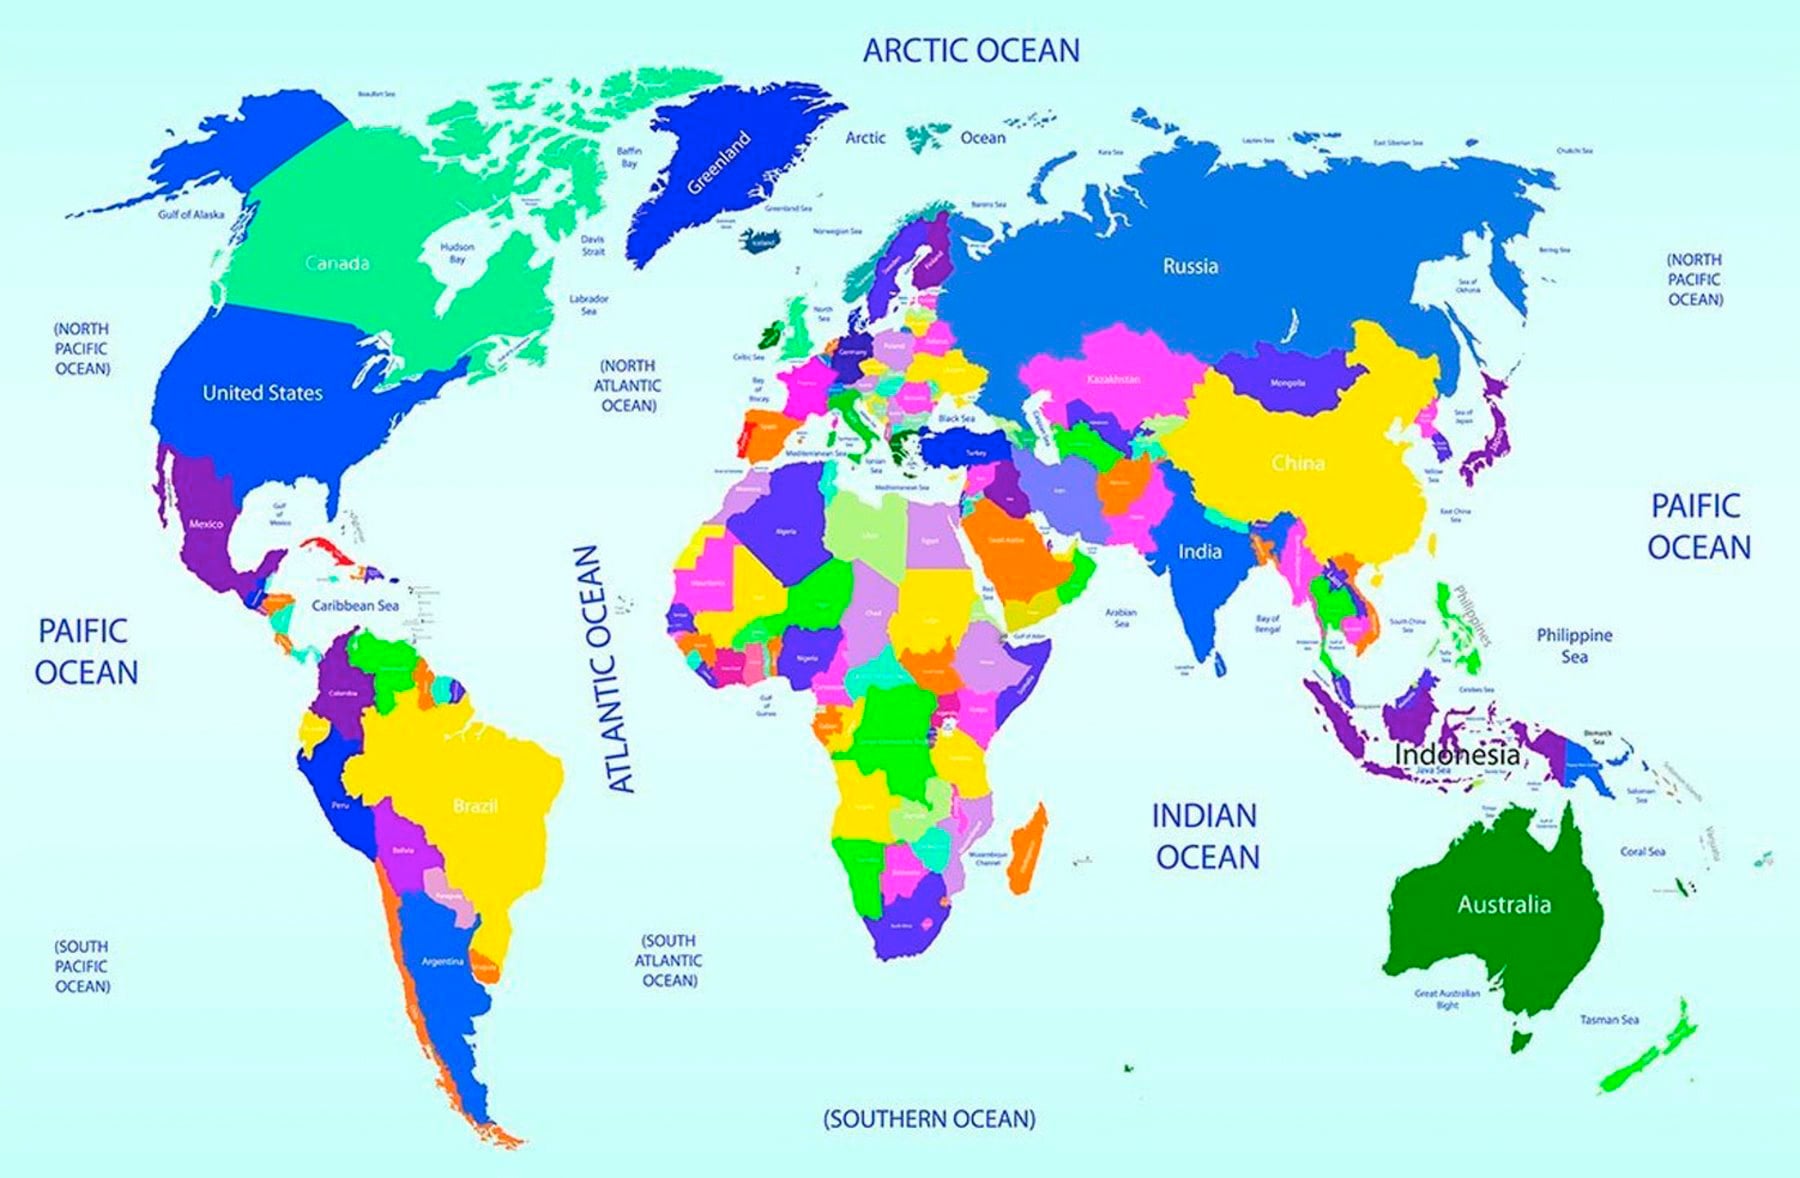 Fototapete »World map«